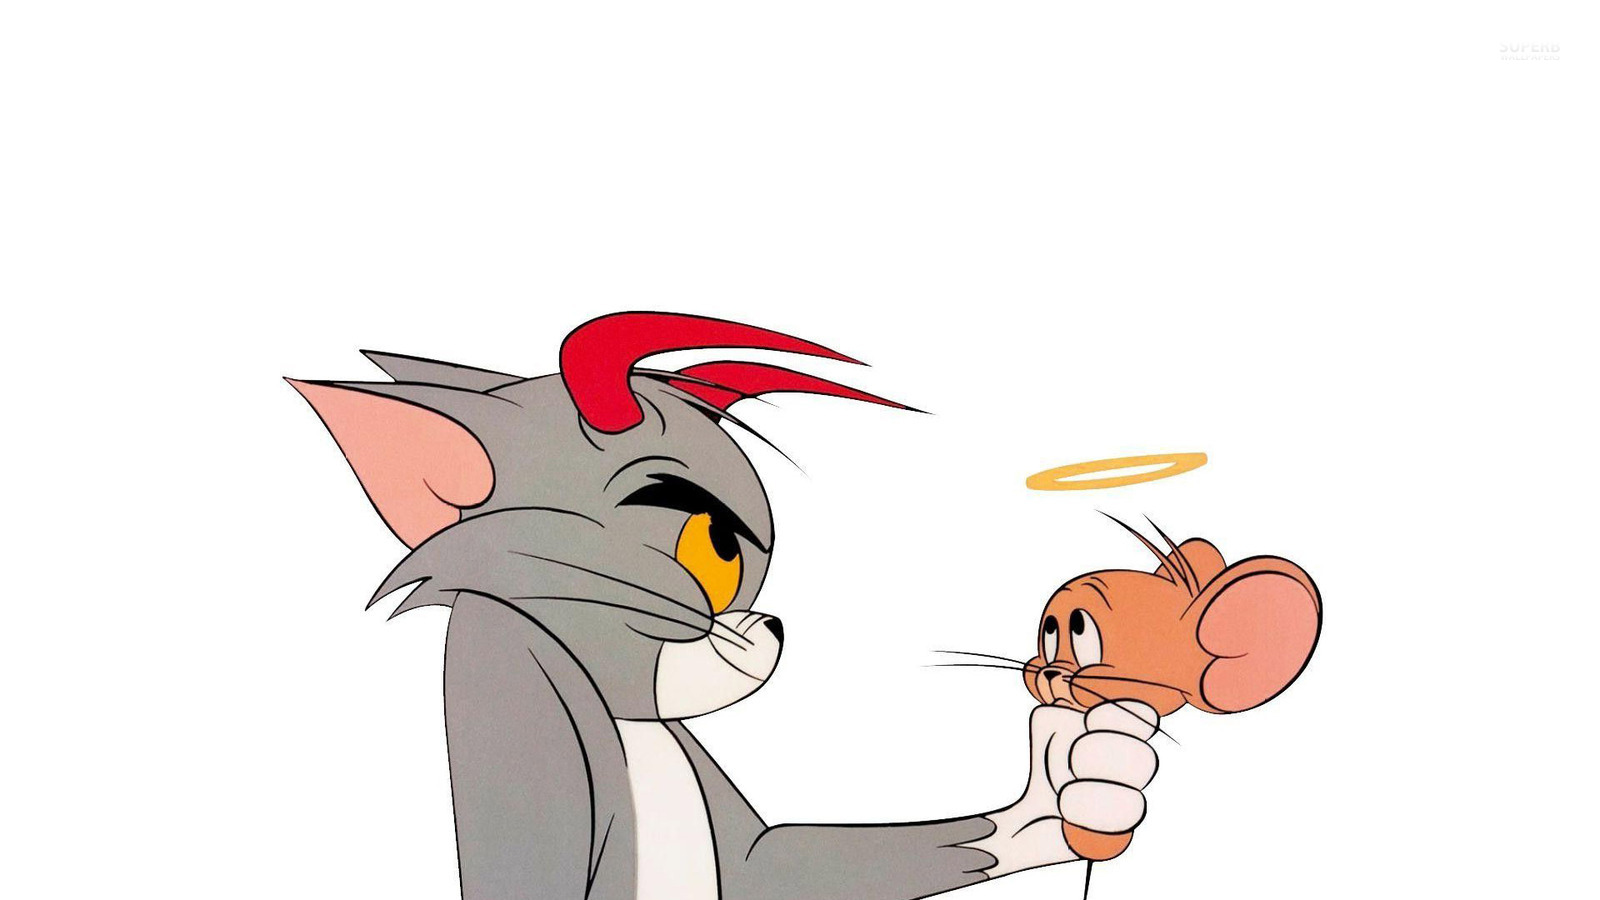 Tom and Jerry - Cartoons Wallpaper (38677687) - Fanpop